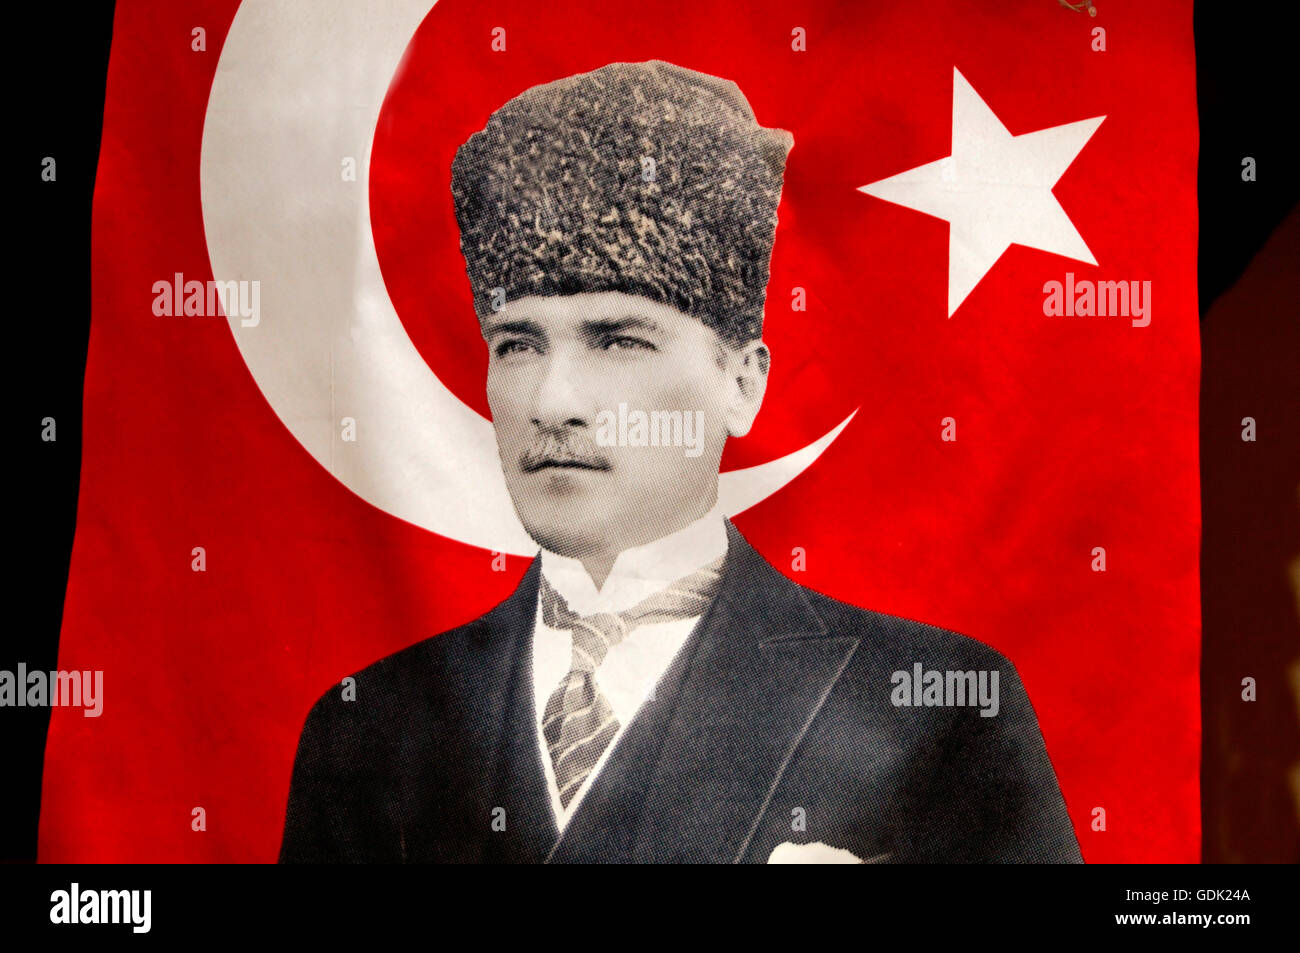 Ataturk on the national flag, Turkey. Stock Photo